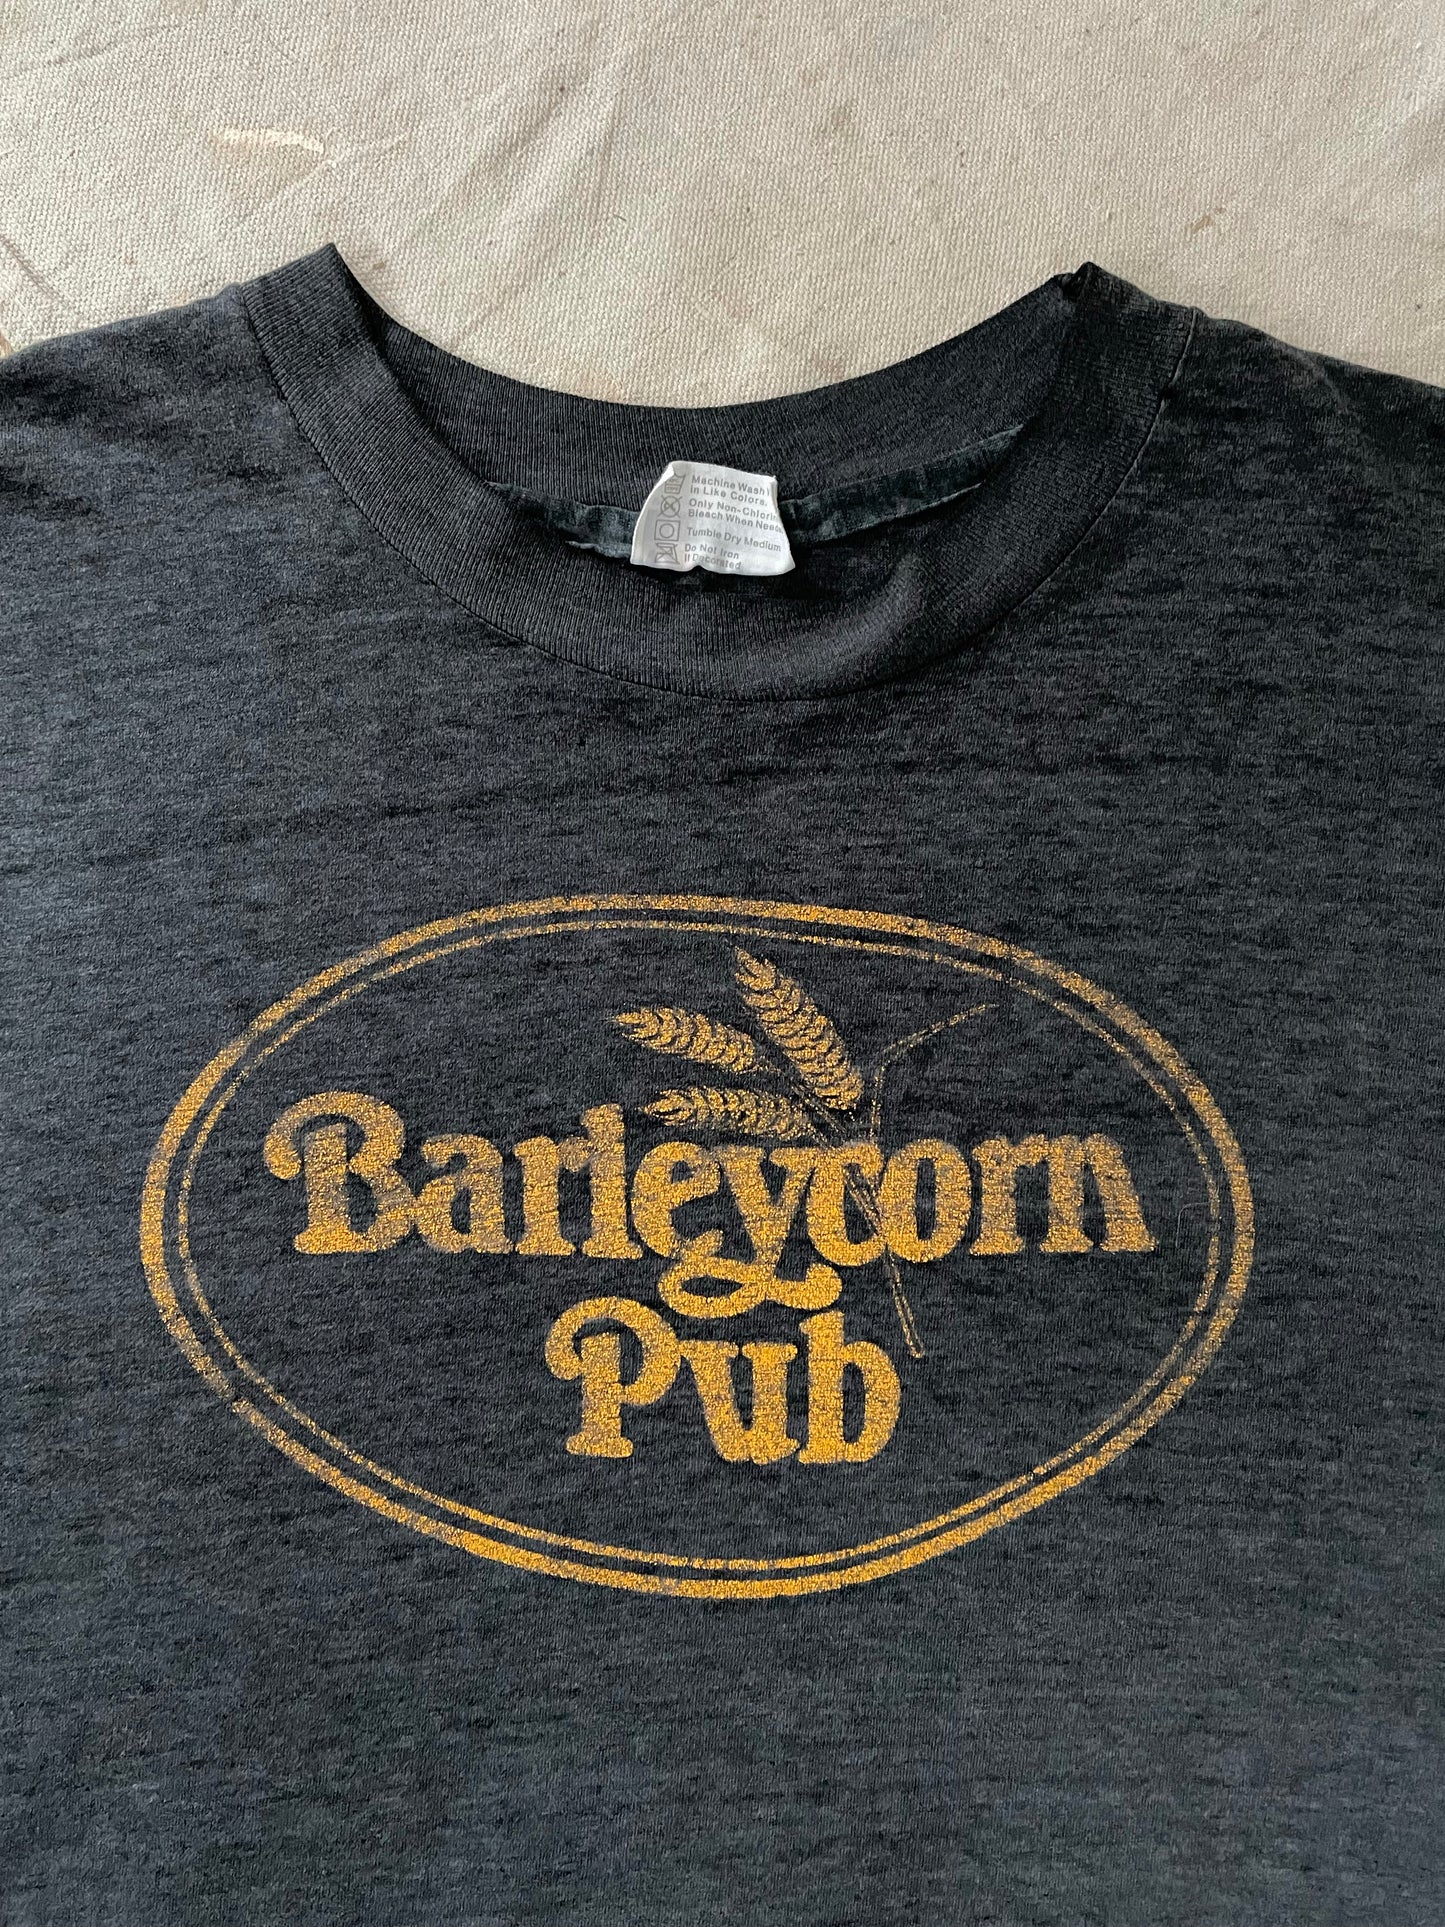 Barleycorn Pub Tee